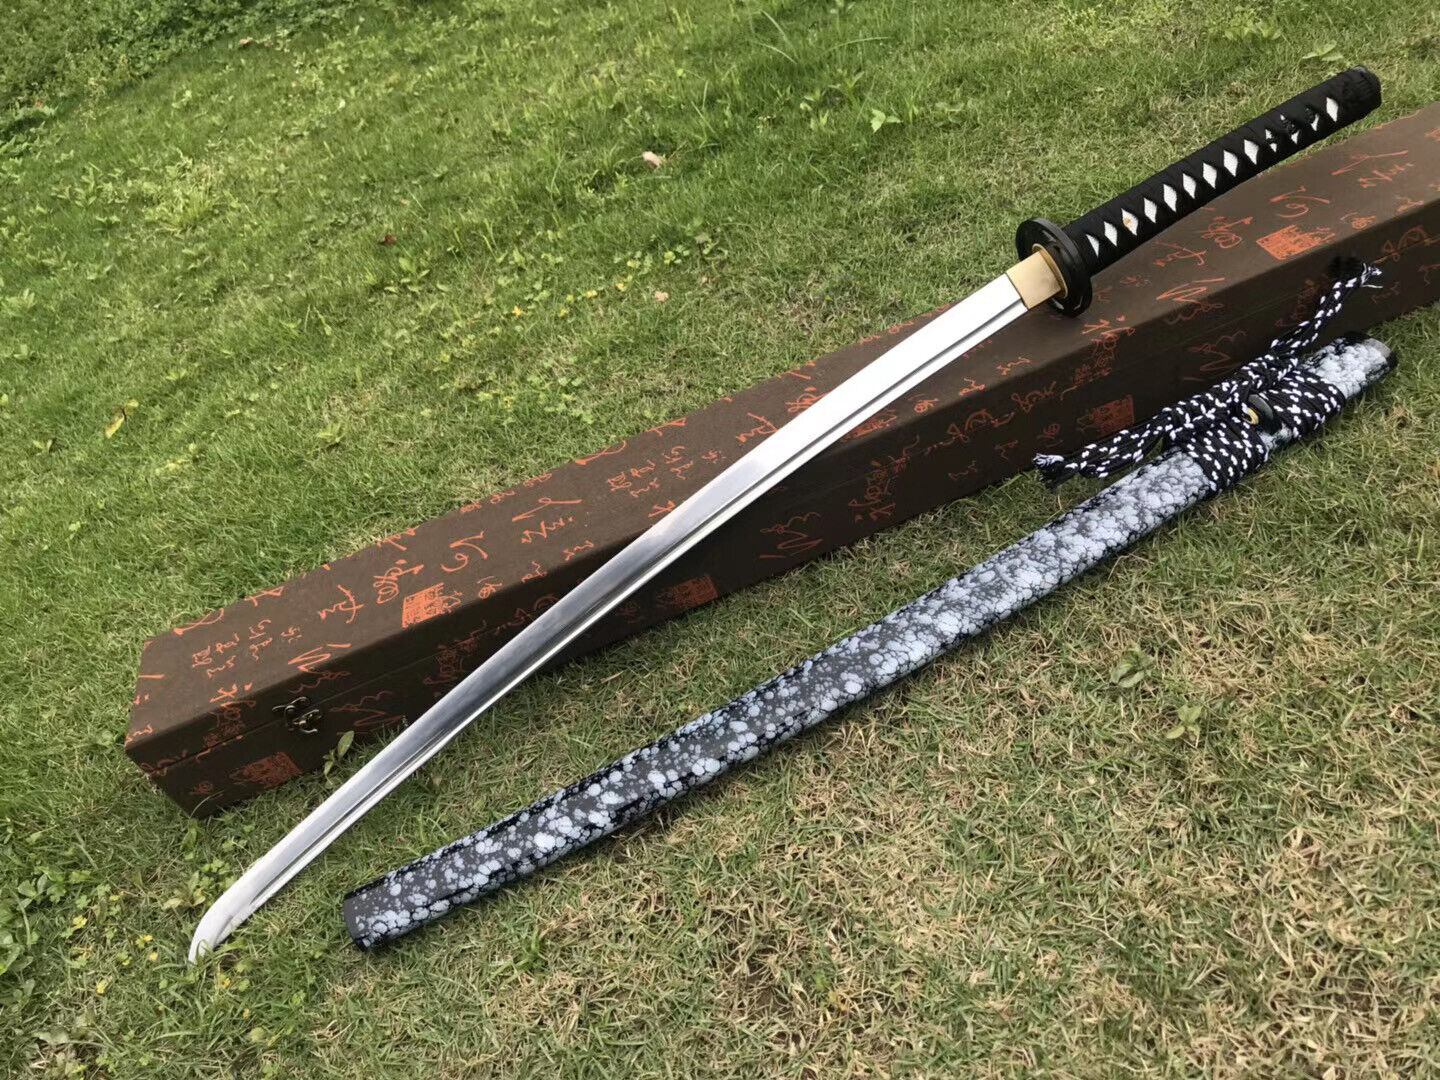 Handmade 9260 Spring Steel High Quality Japanese samurai sword Very Sharp